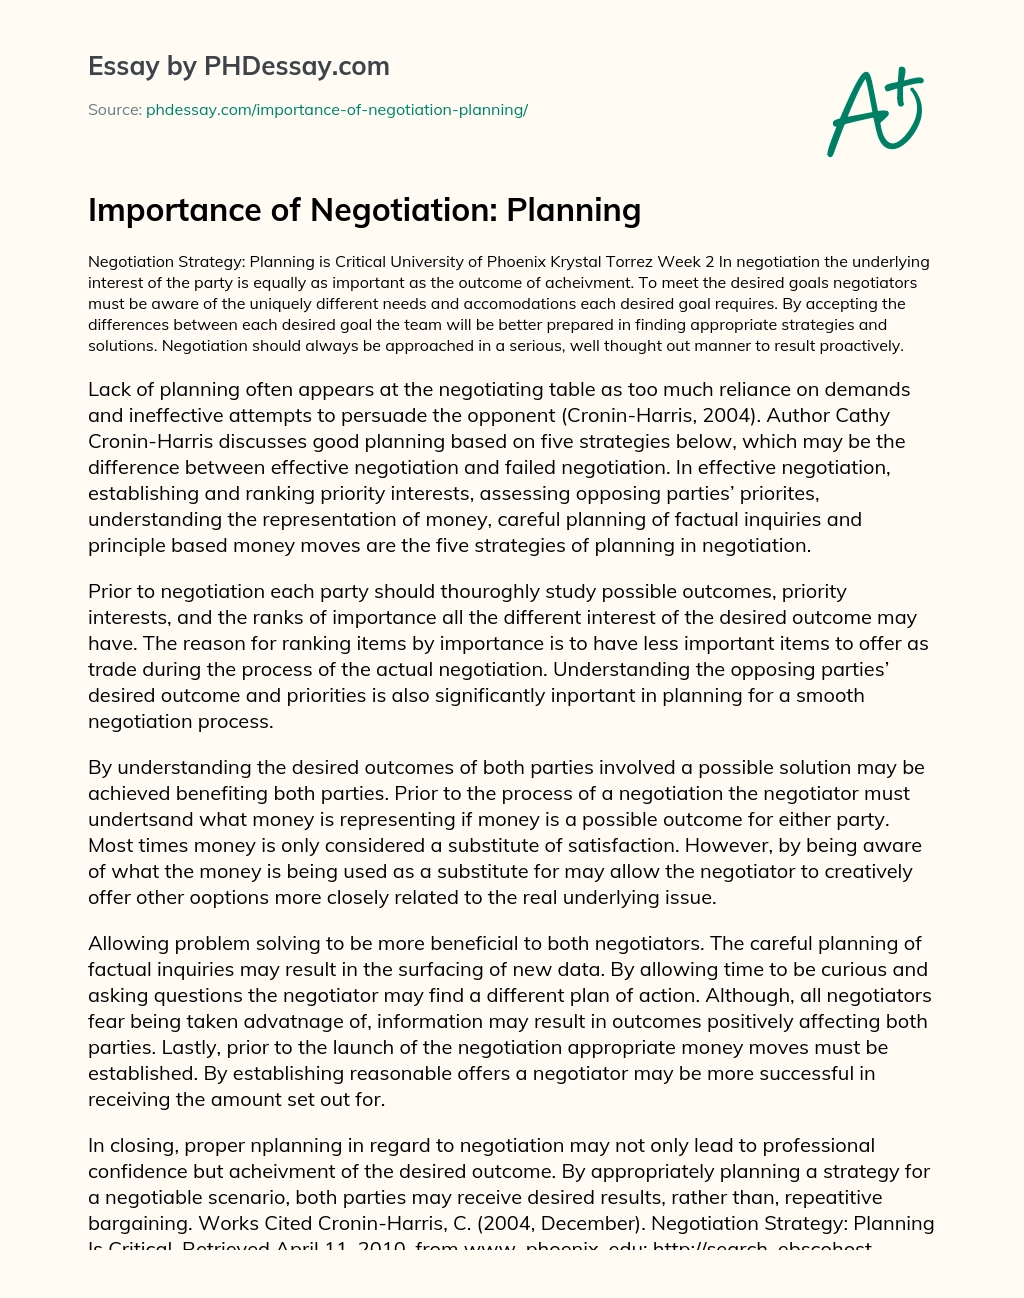 Importance of Negotiation: Planning essay